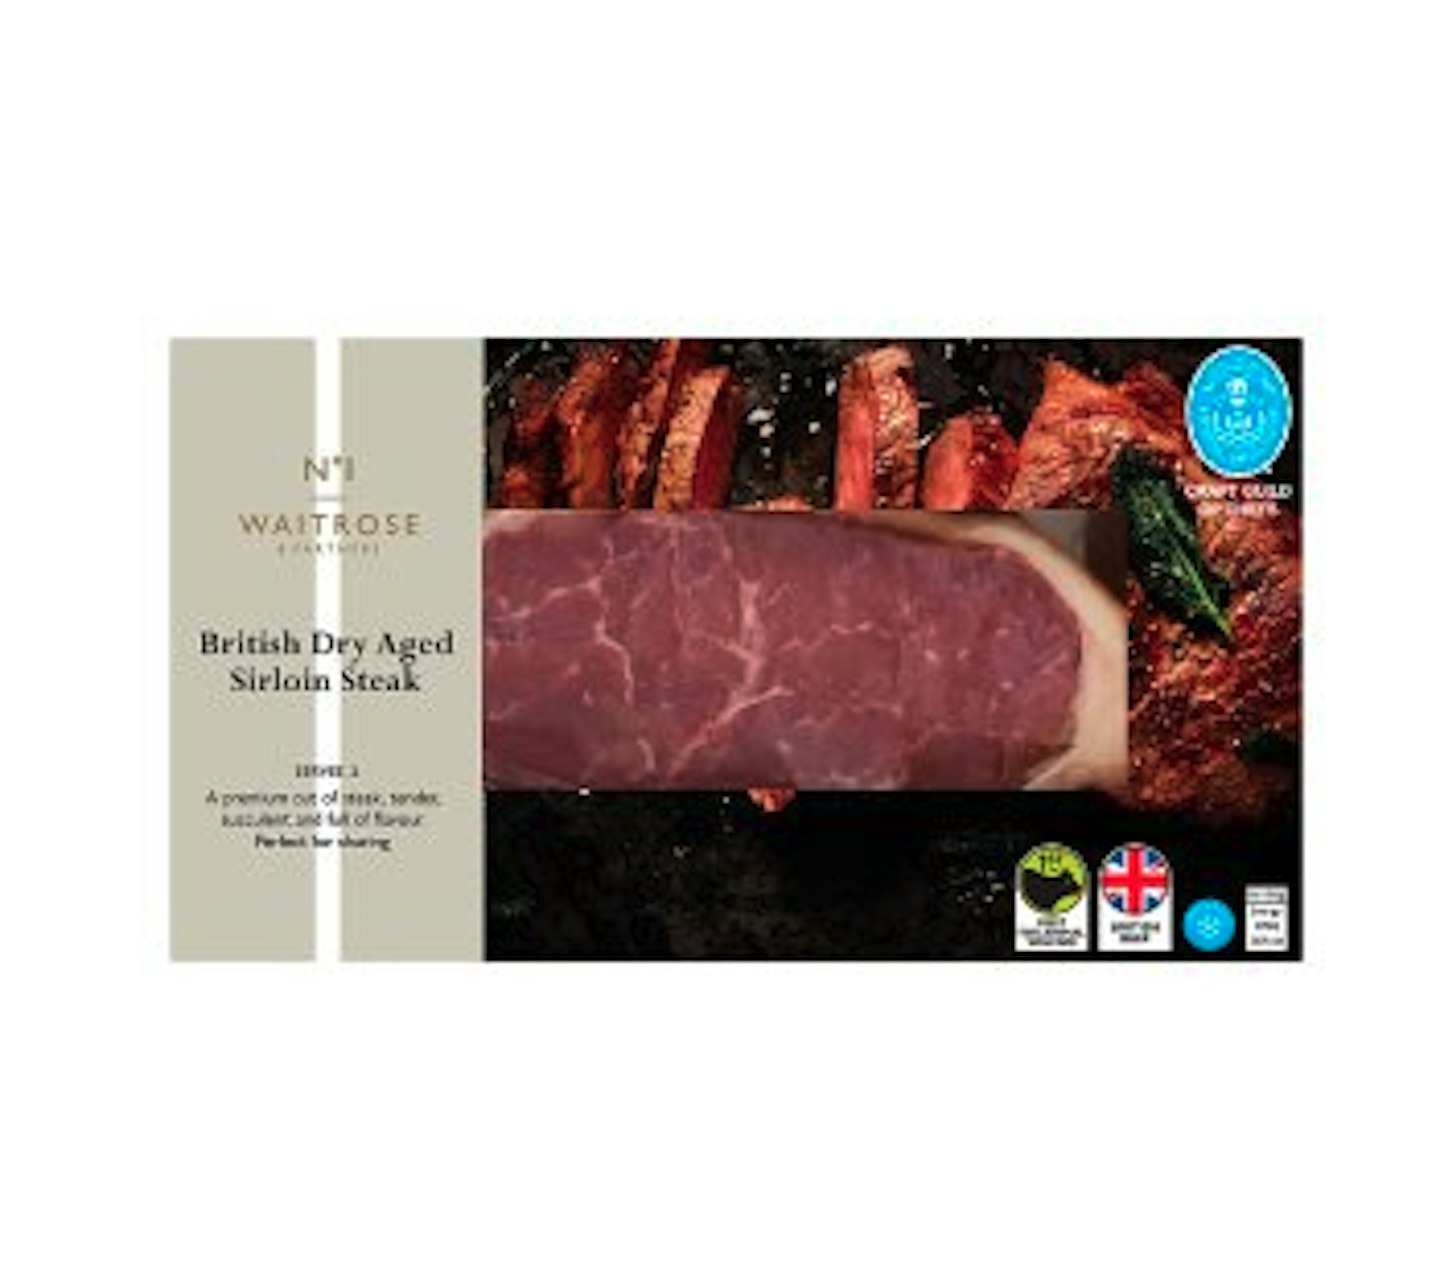 No. 1 30 Day Dry Aged Sirloin Steak